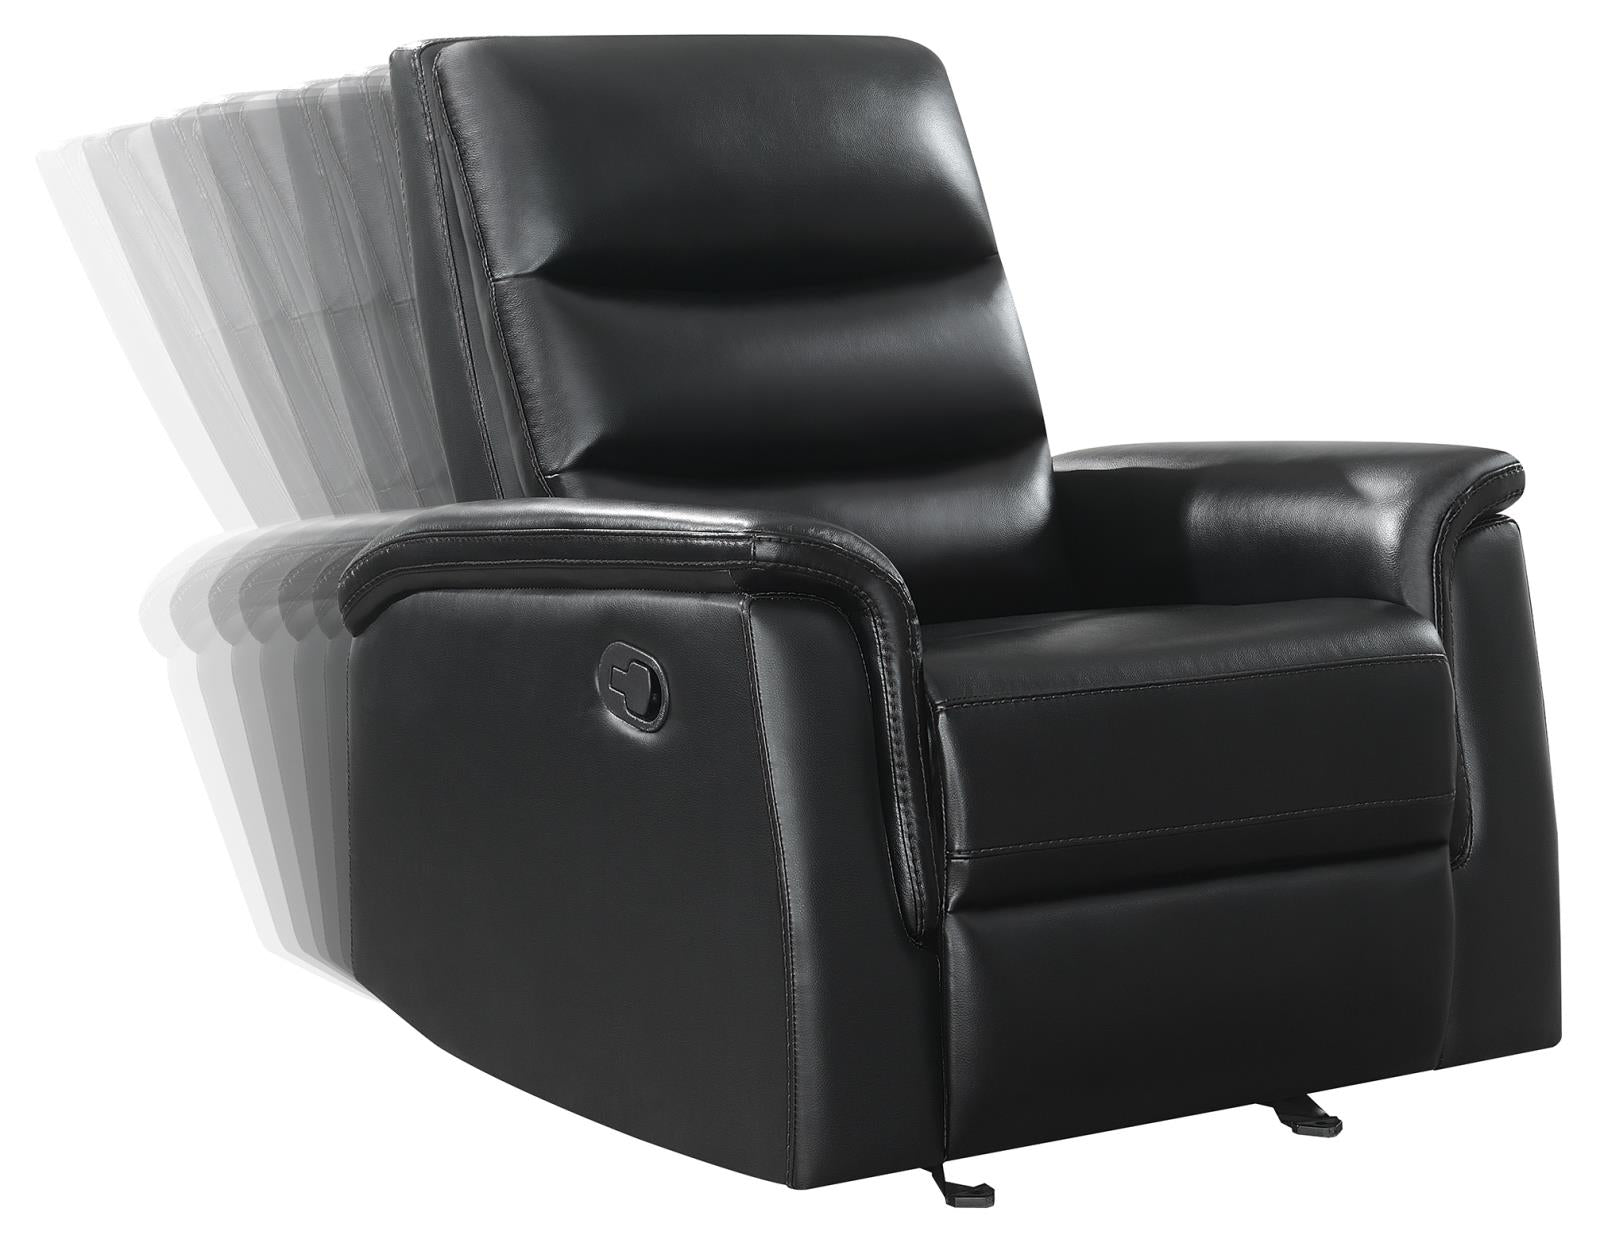 Dario Upholstered Living Room Set Black - What A Room